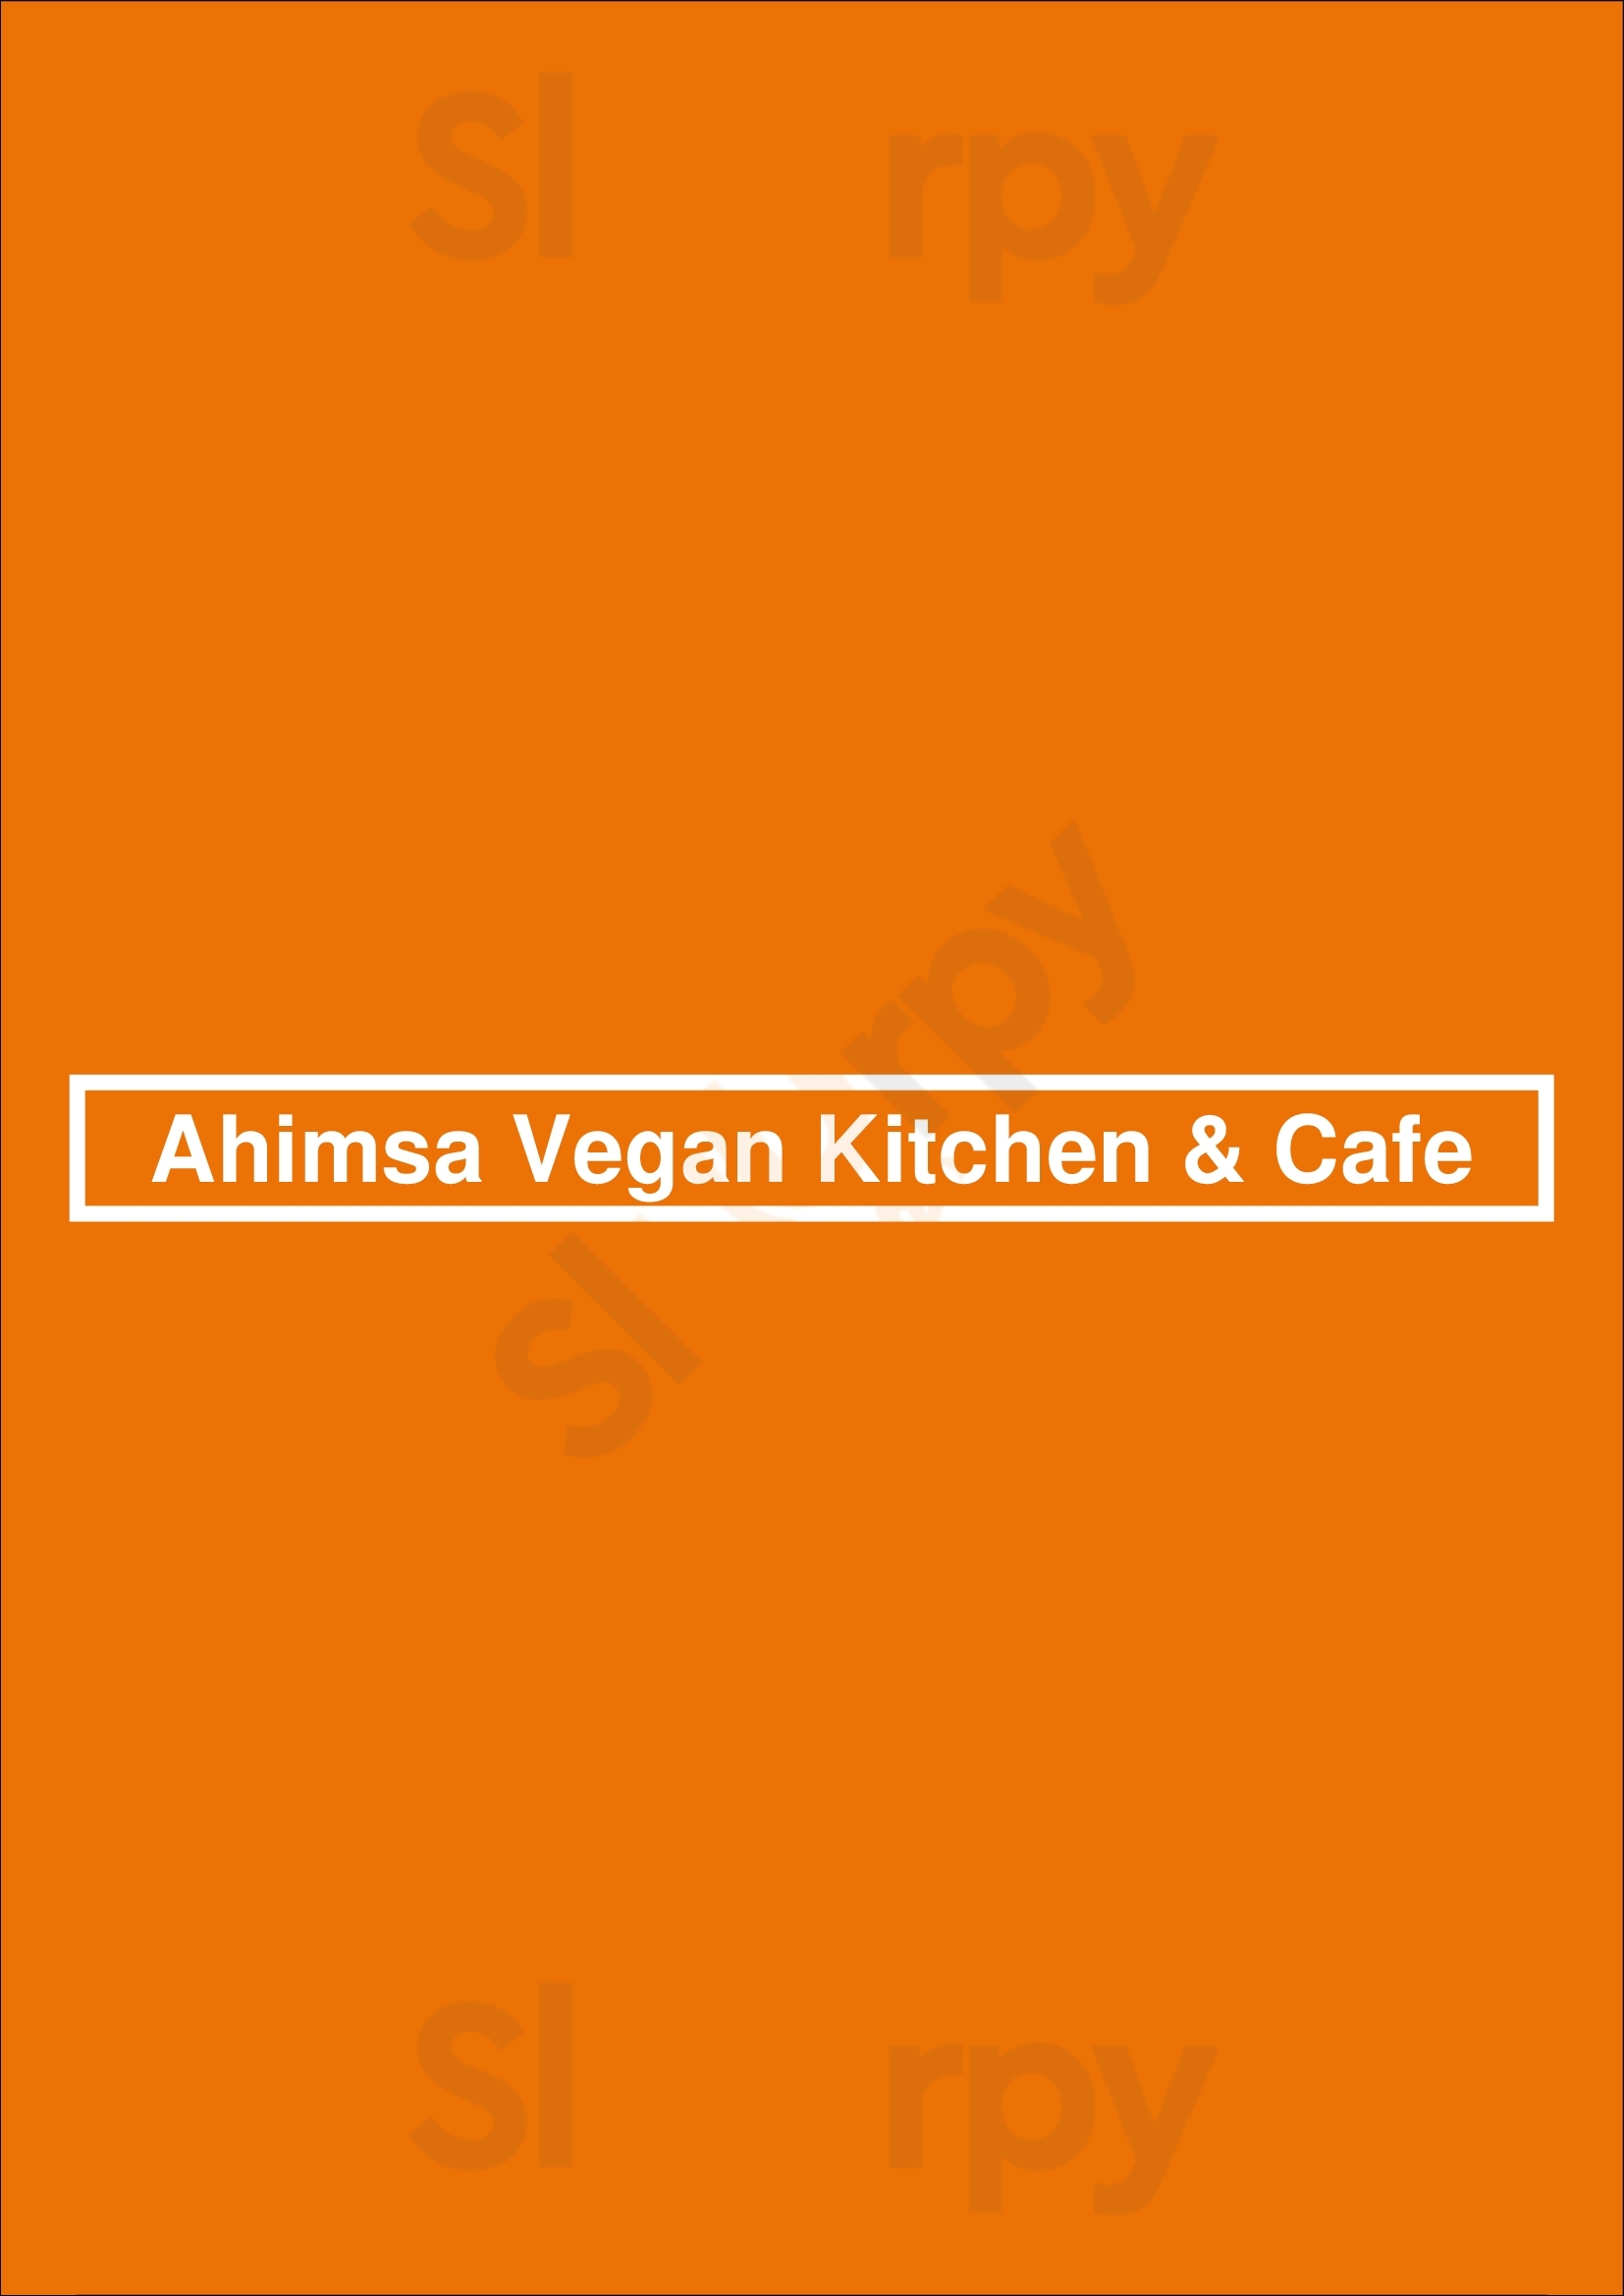 Ahimsa Vegan Kitchen & Cafe Long Beach Menu - 1